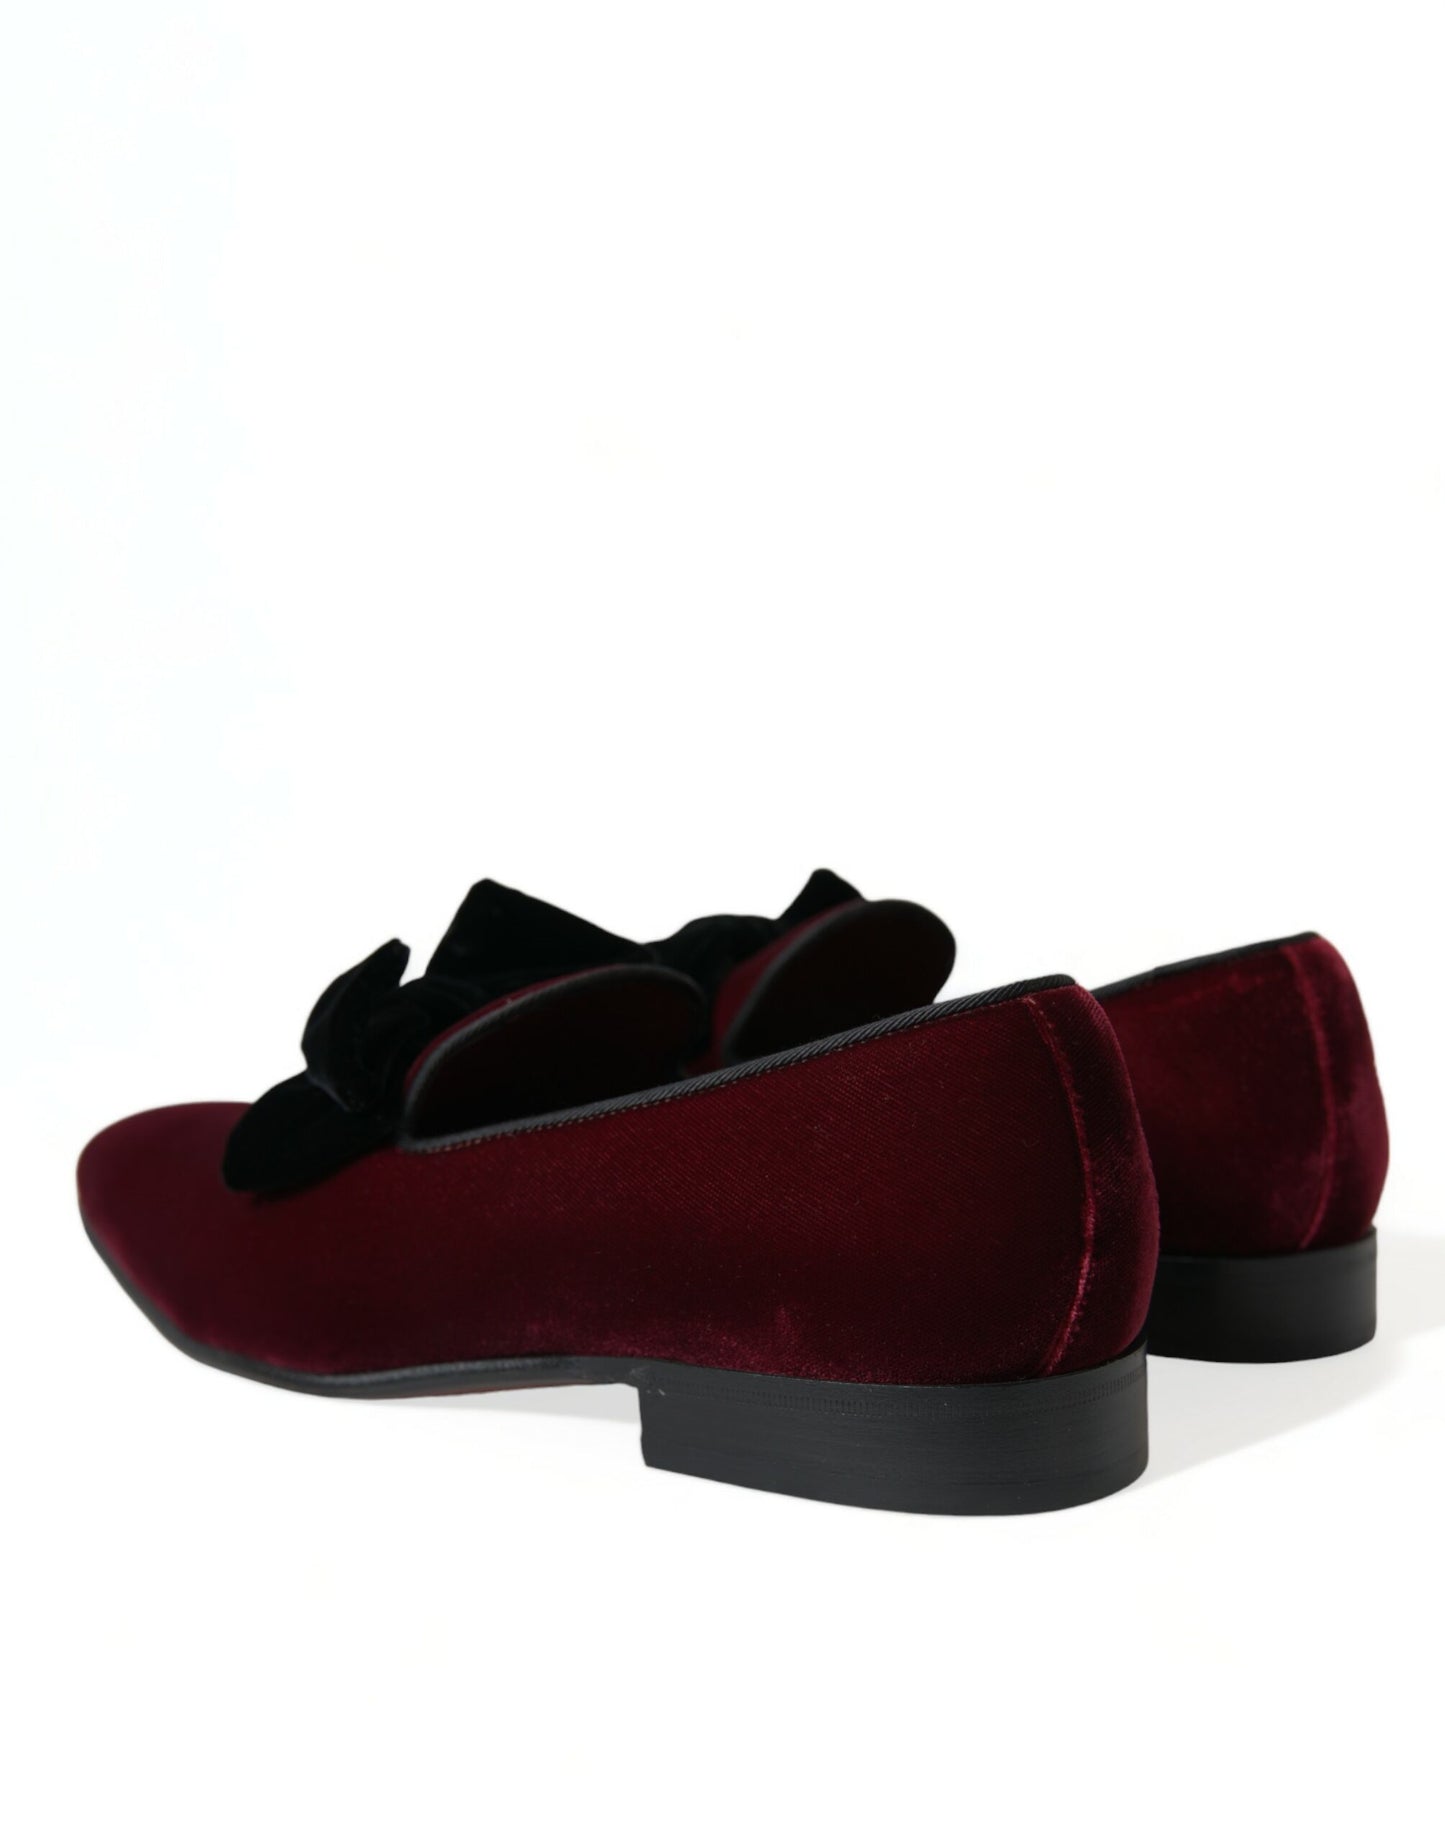 Burgundy Velvet Loafers - Elegance with a Twist